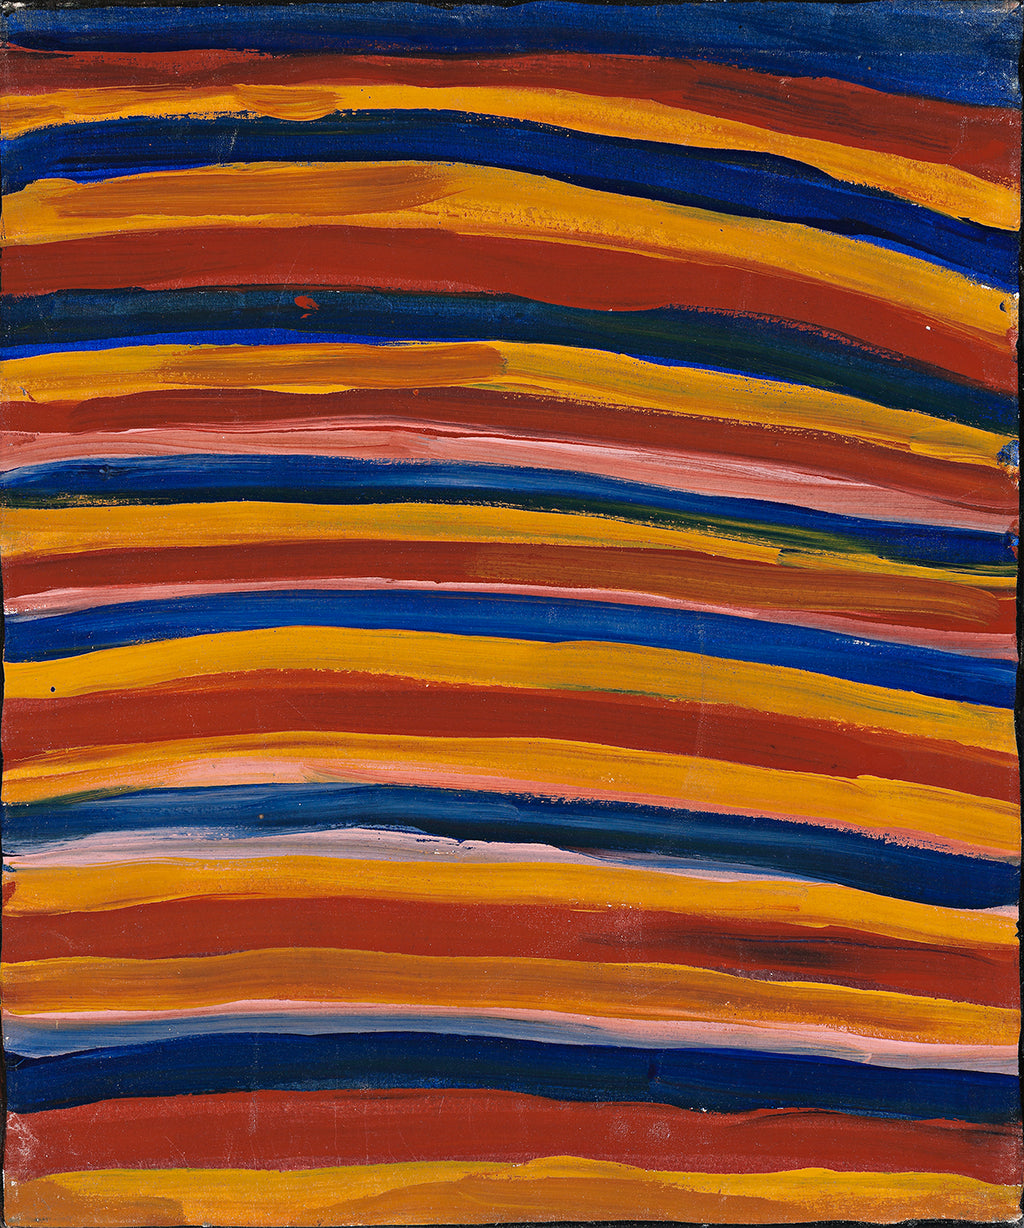 Emily Kame Kngwarreye, 'Untitled', 1994, 94H035, 30 x 40 cm